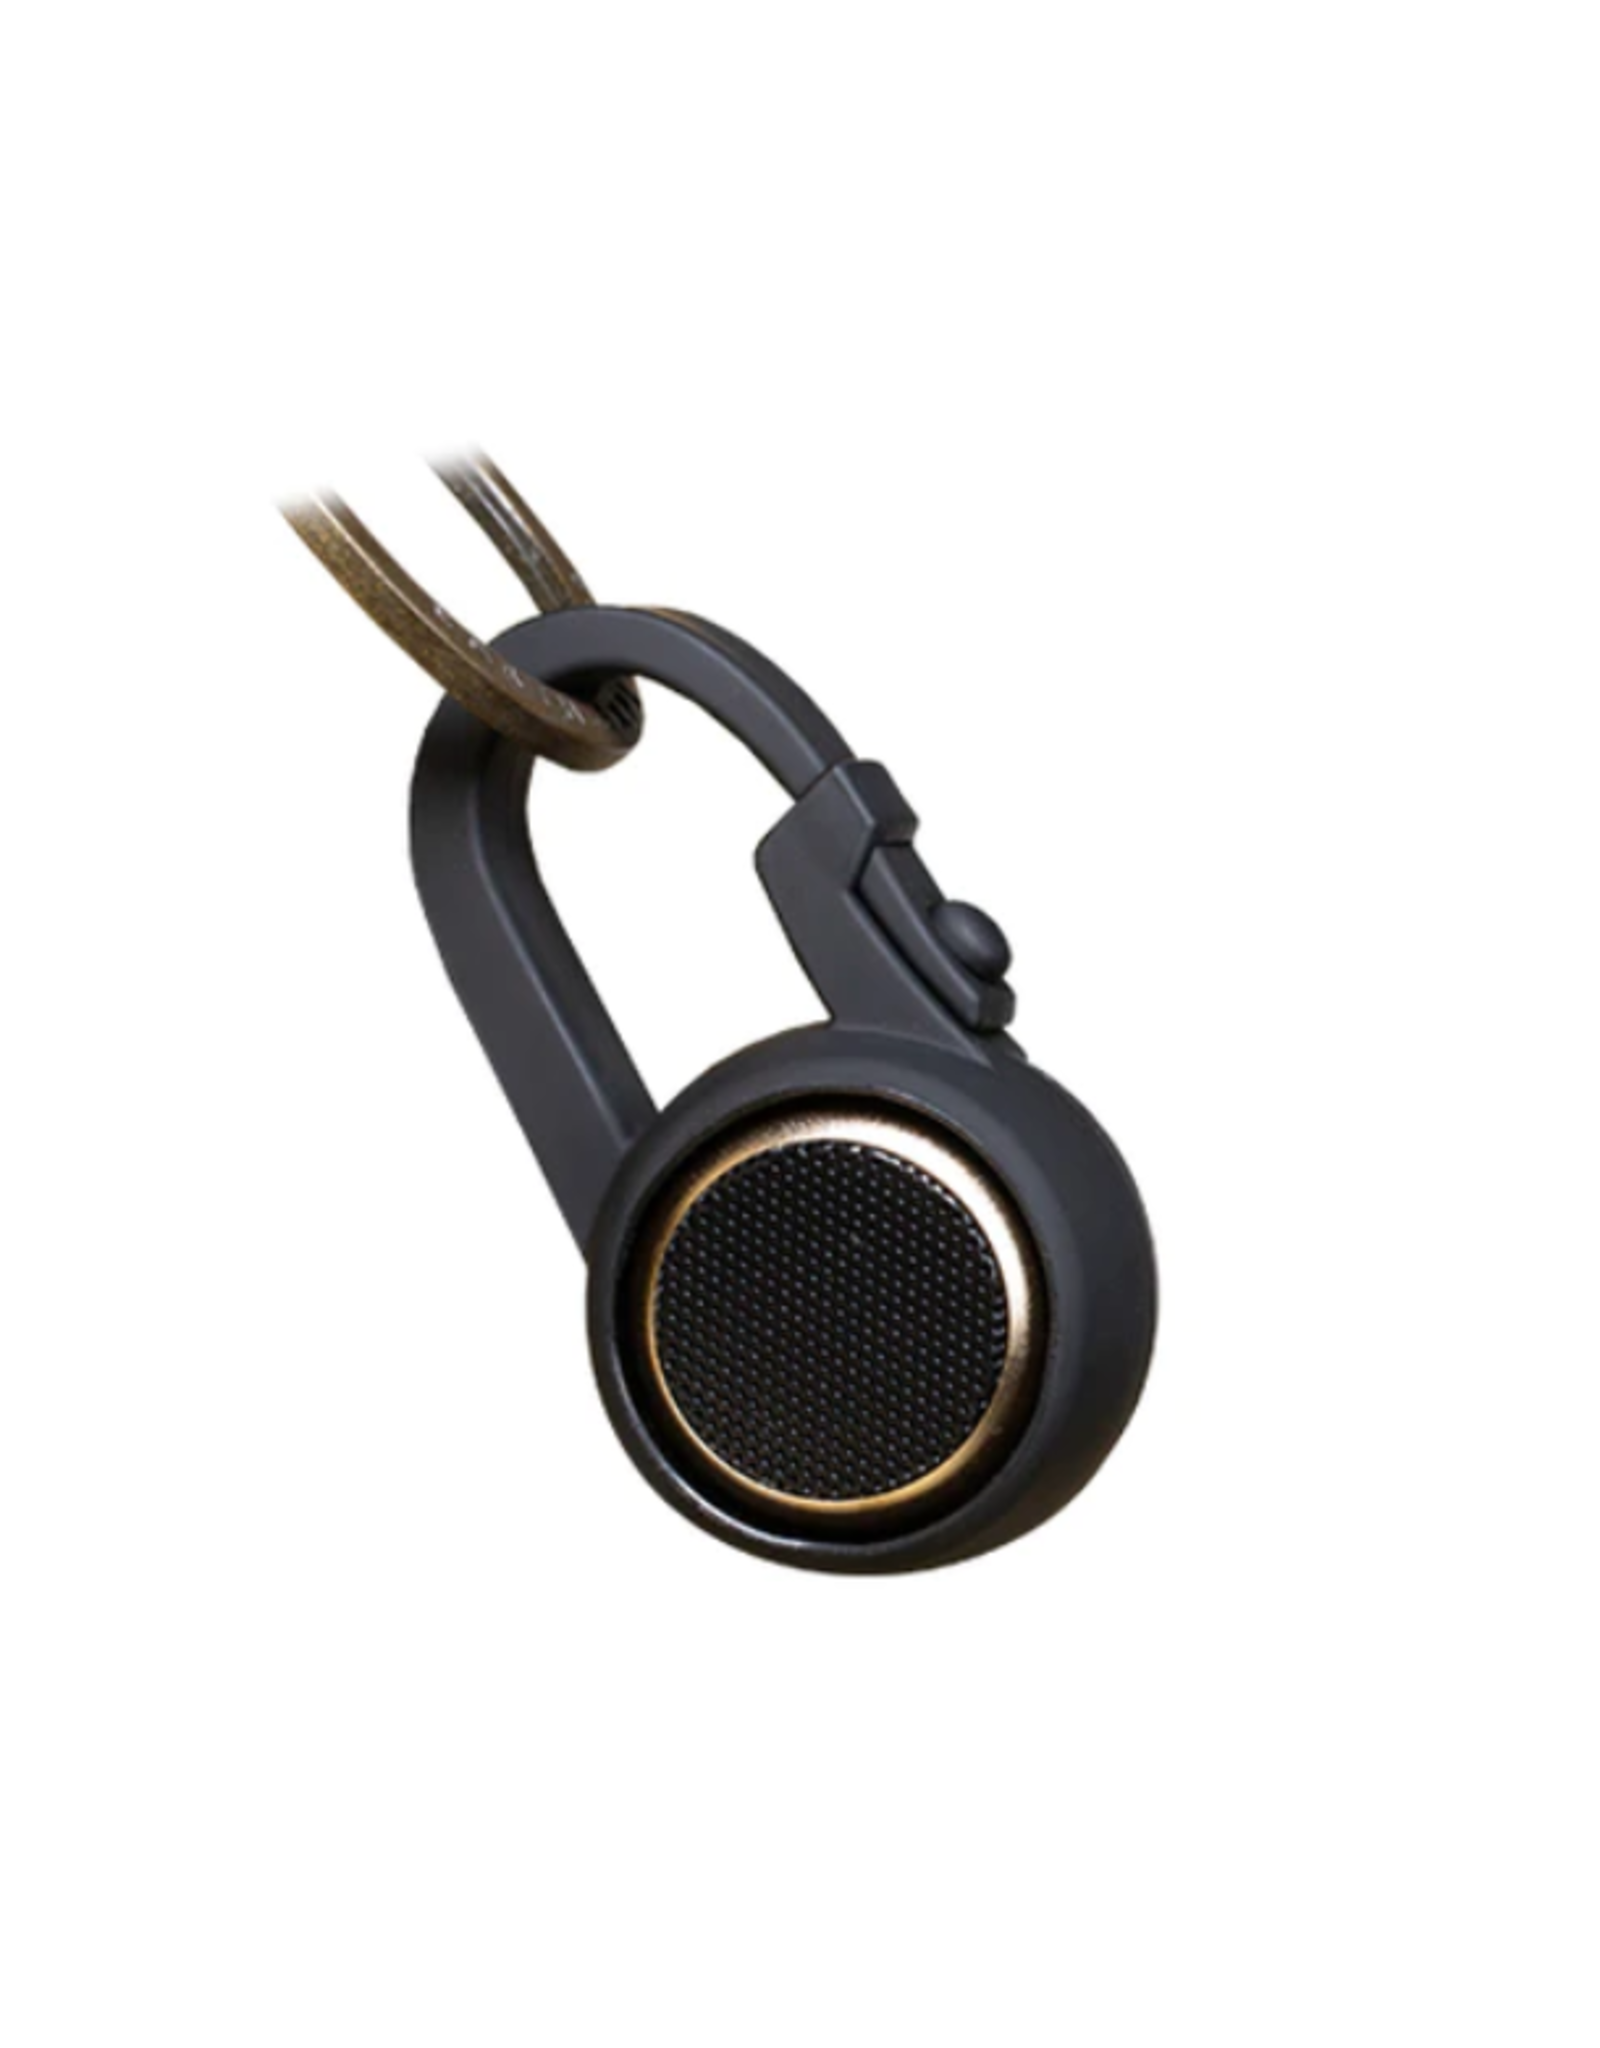 Fashionit Micro U Speaker Holder, black